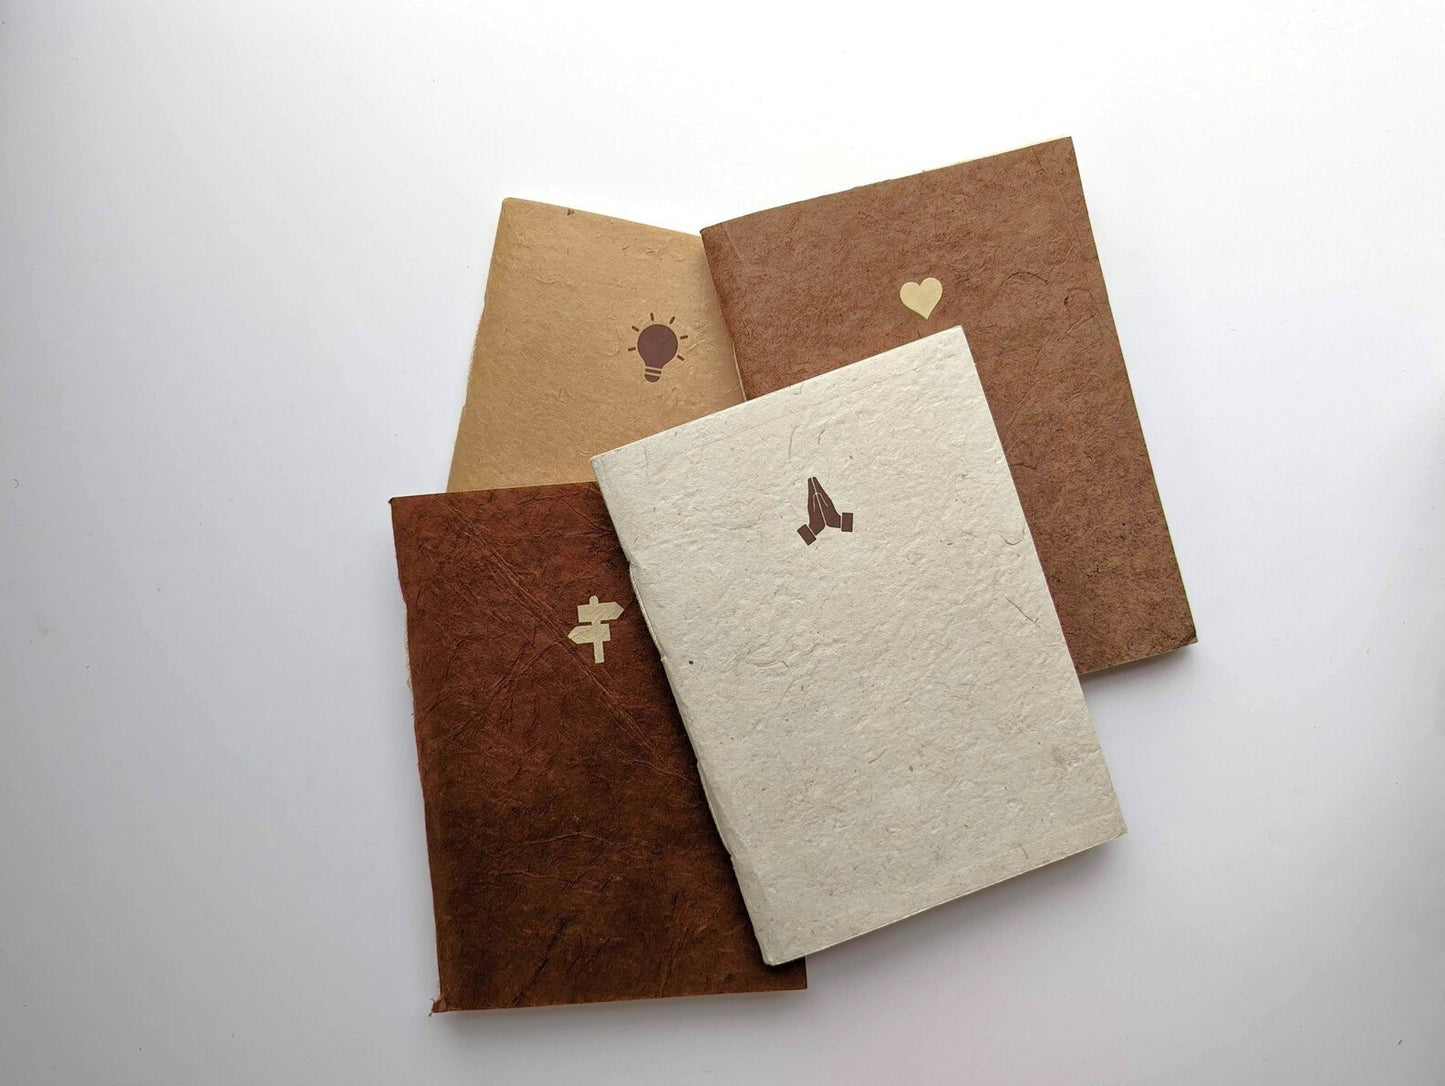 Handmade paper notebook | Katha Love